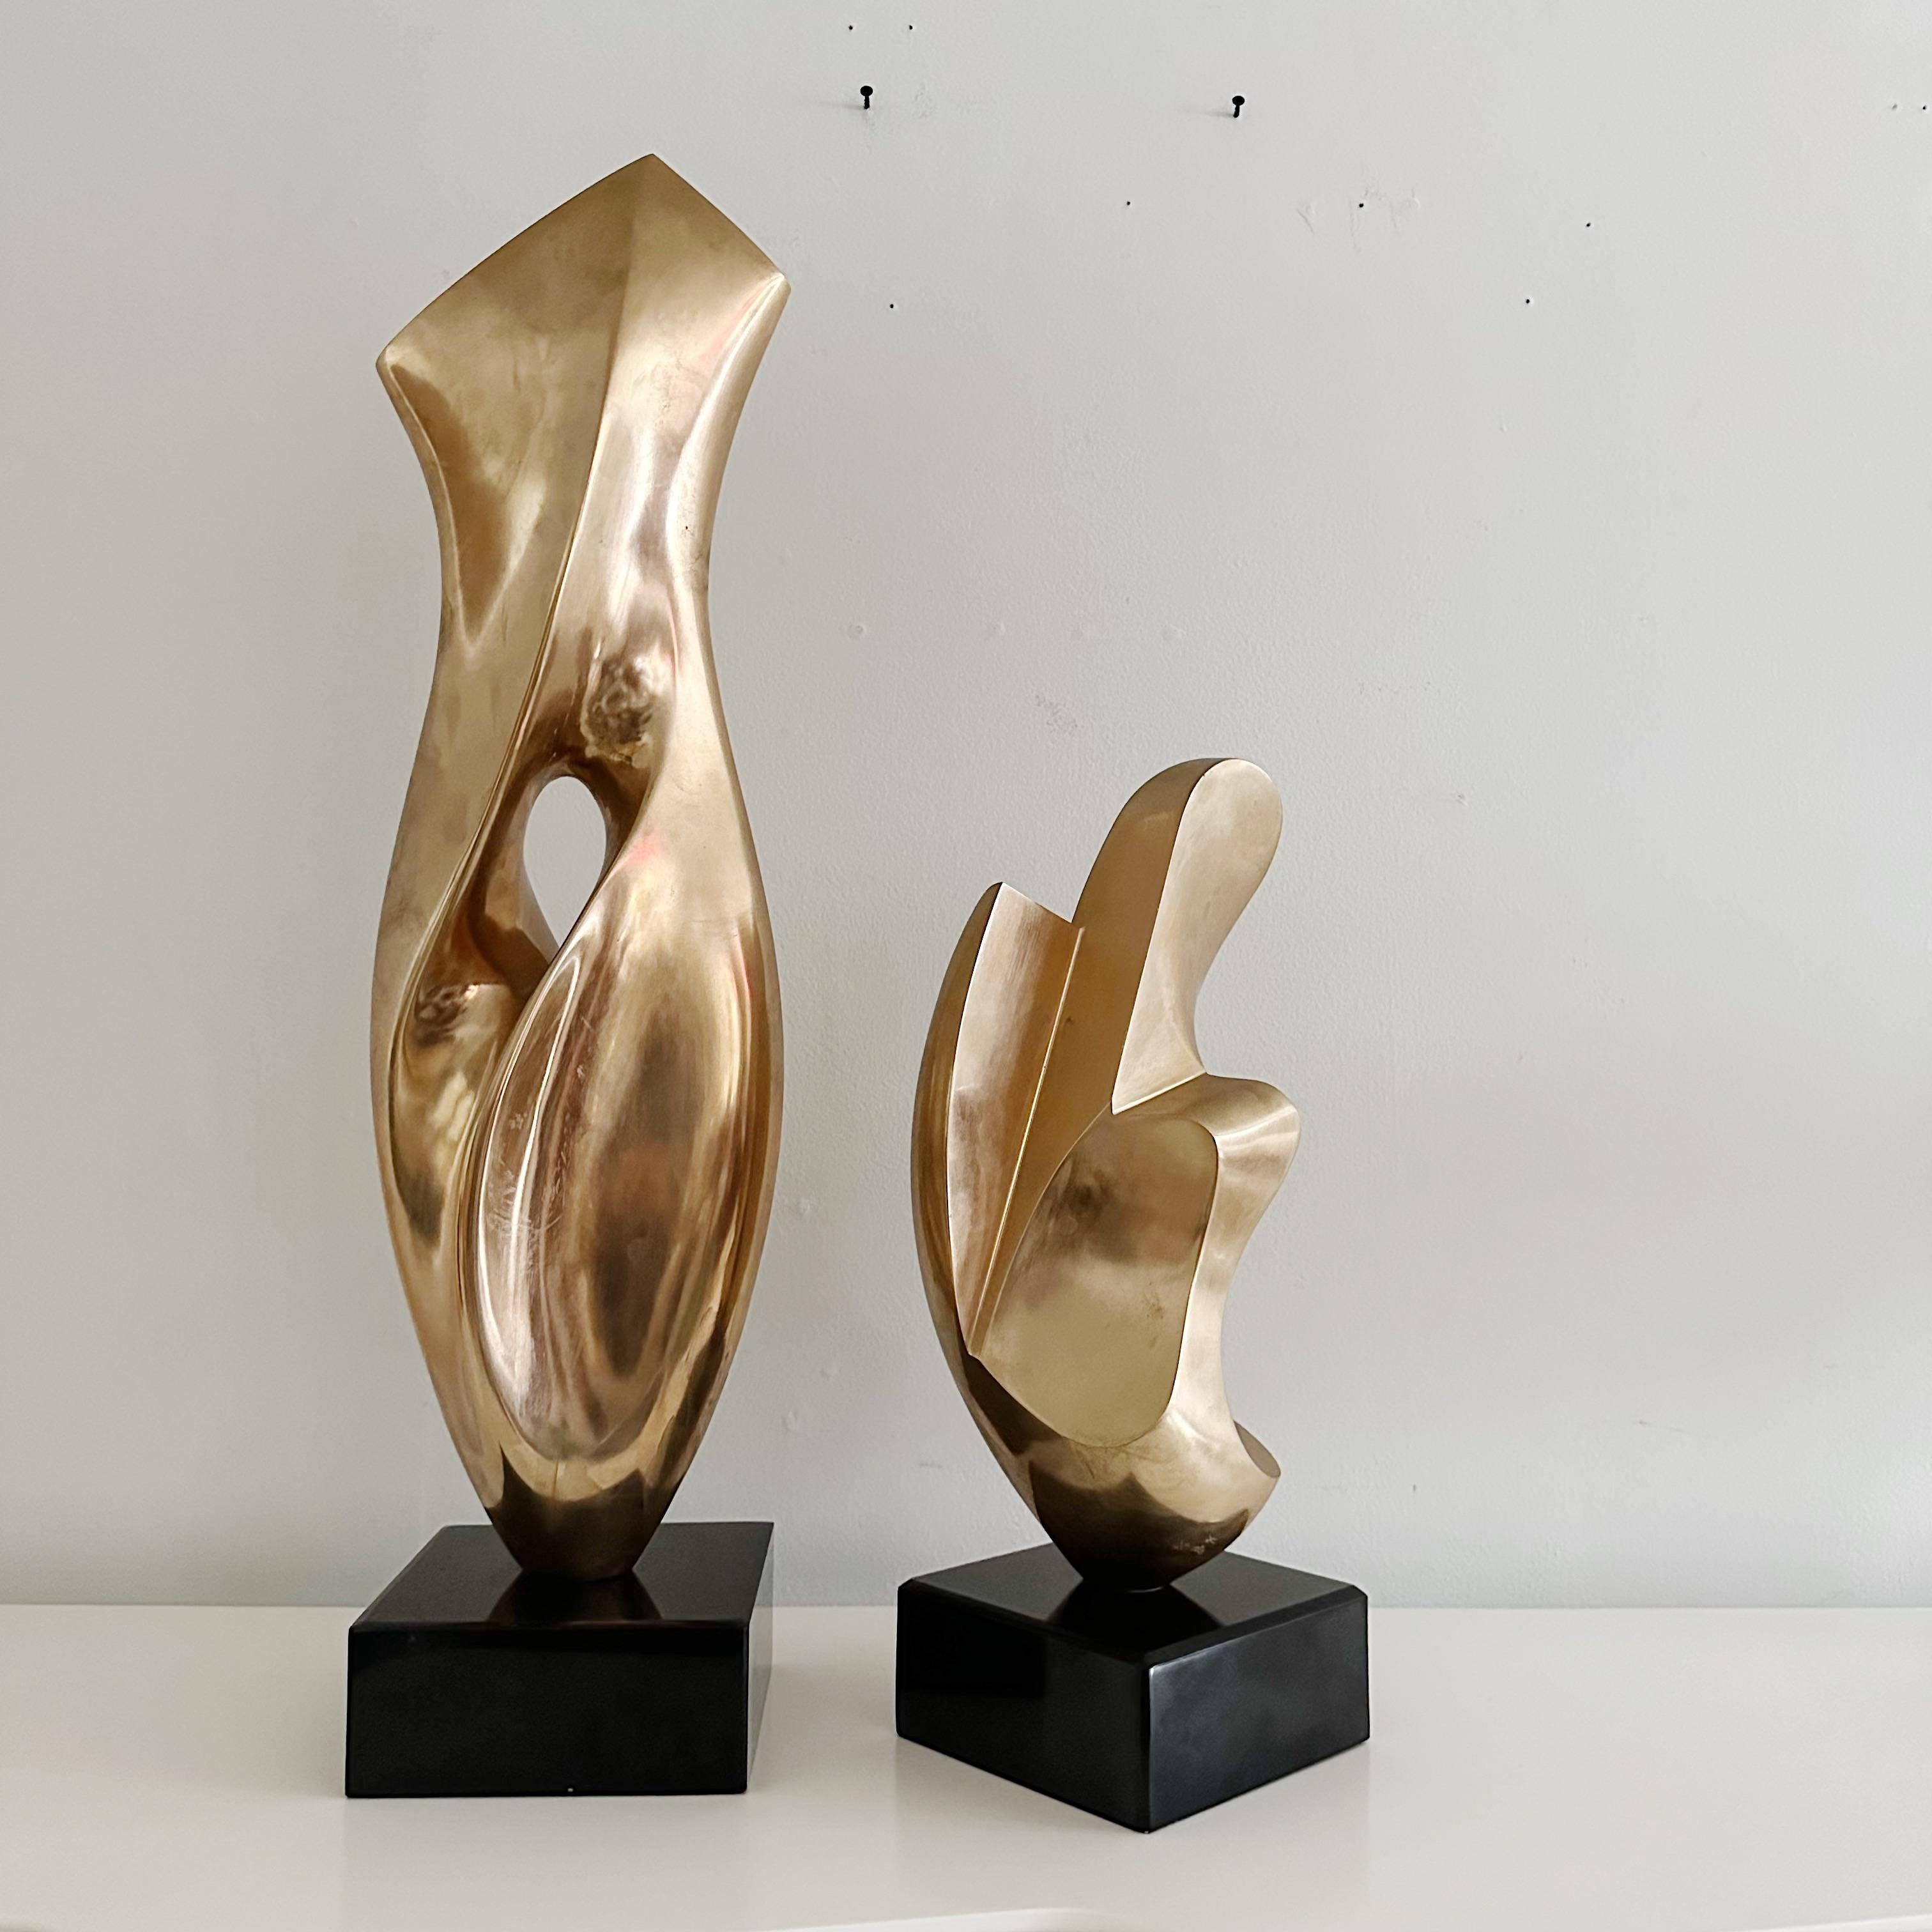 Fin du 20e siècle  Antonio Grediaga Kieff (né en 1936) Sculpture abstraite en bronze massif Circa 1974